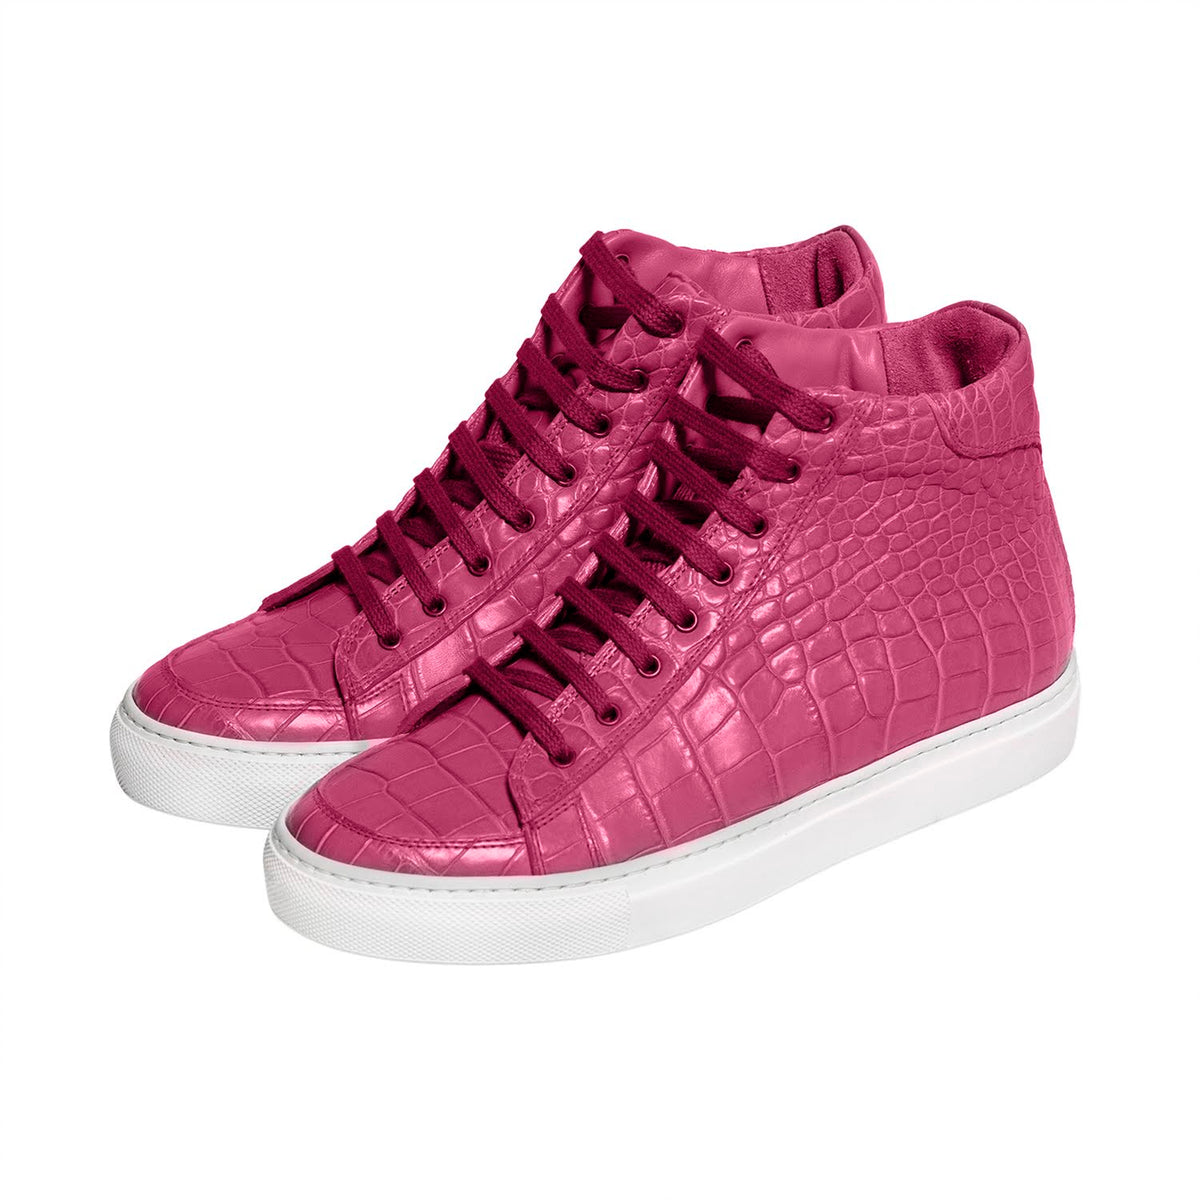 London Pink High-Top Sneakers